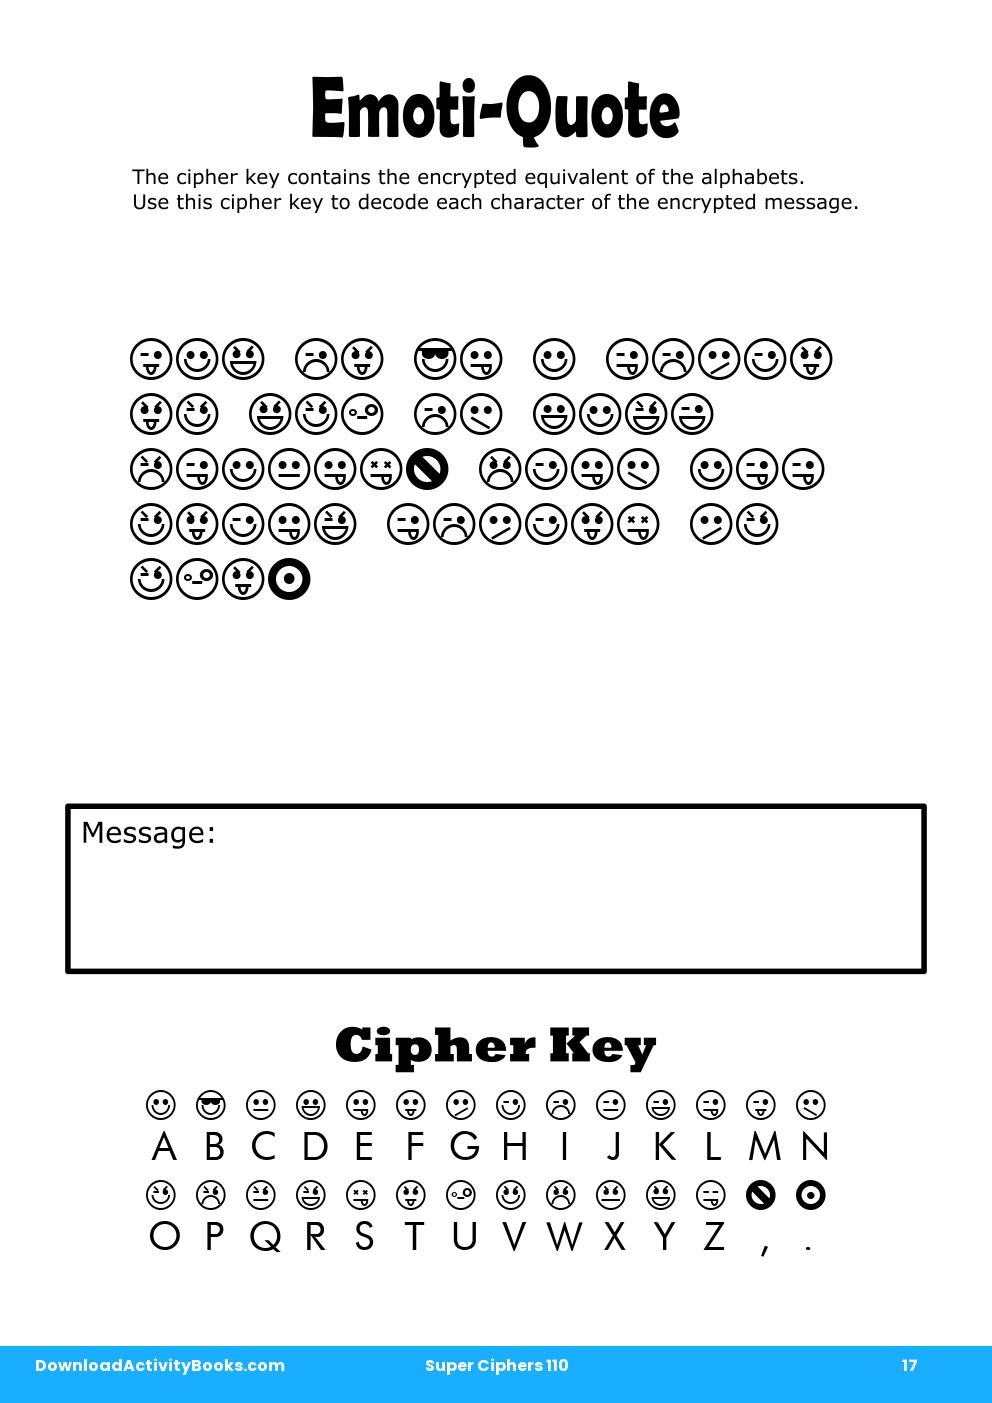 Emoti-Quote in Super Ciphers 110